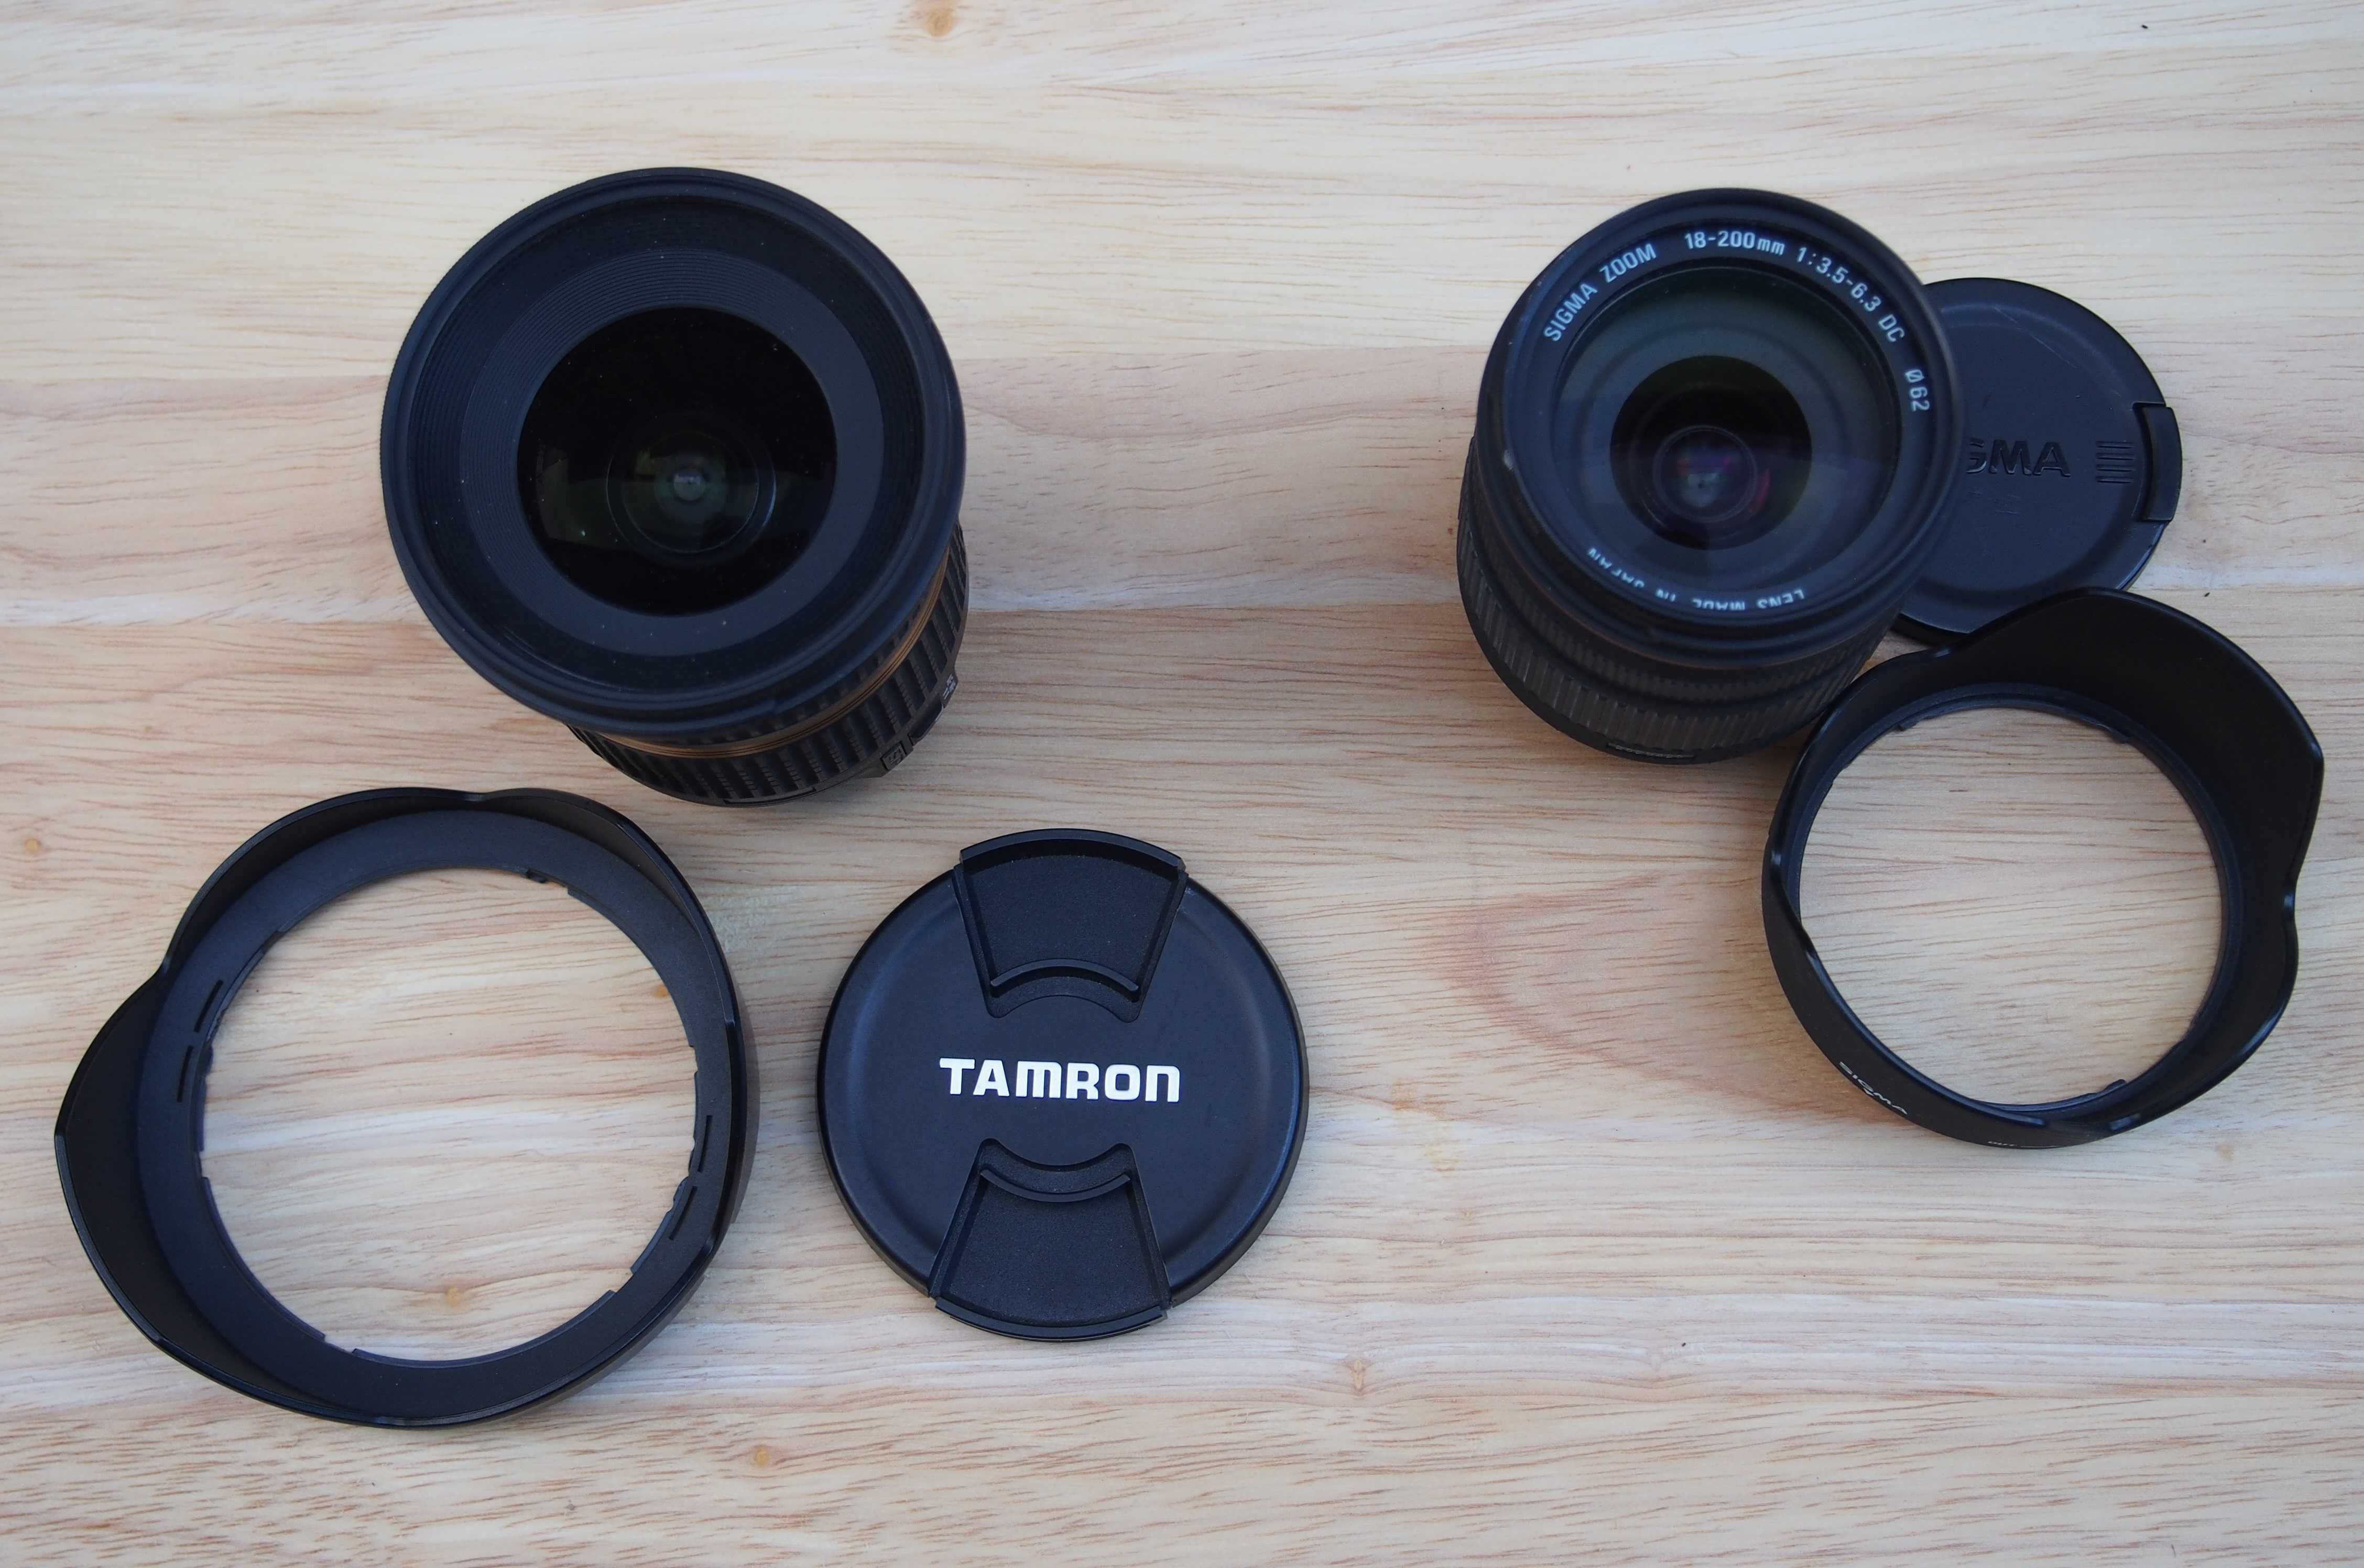 Nikon D90, Tamron SP AF 10-24, Sigma DC 18-200mm